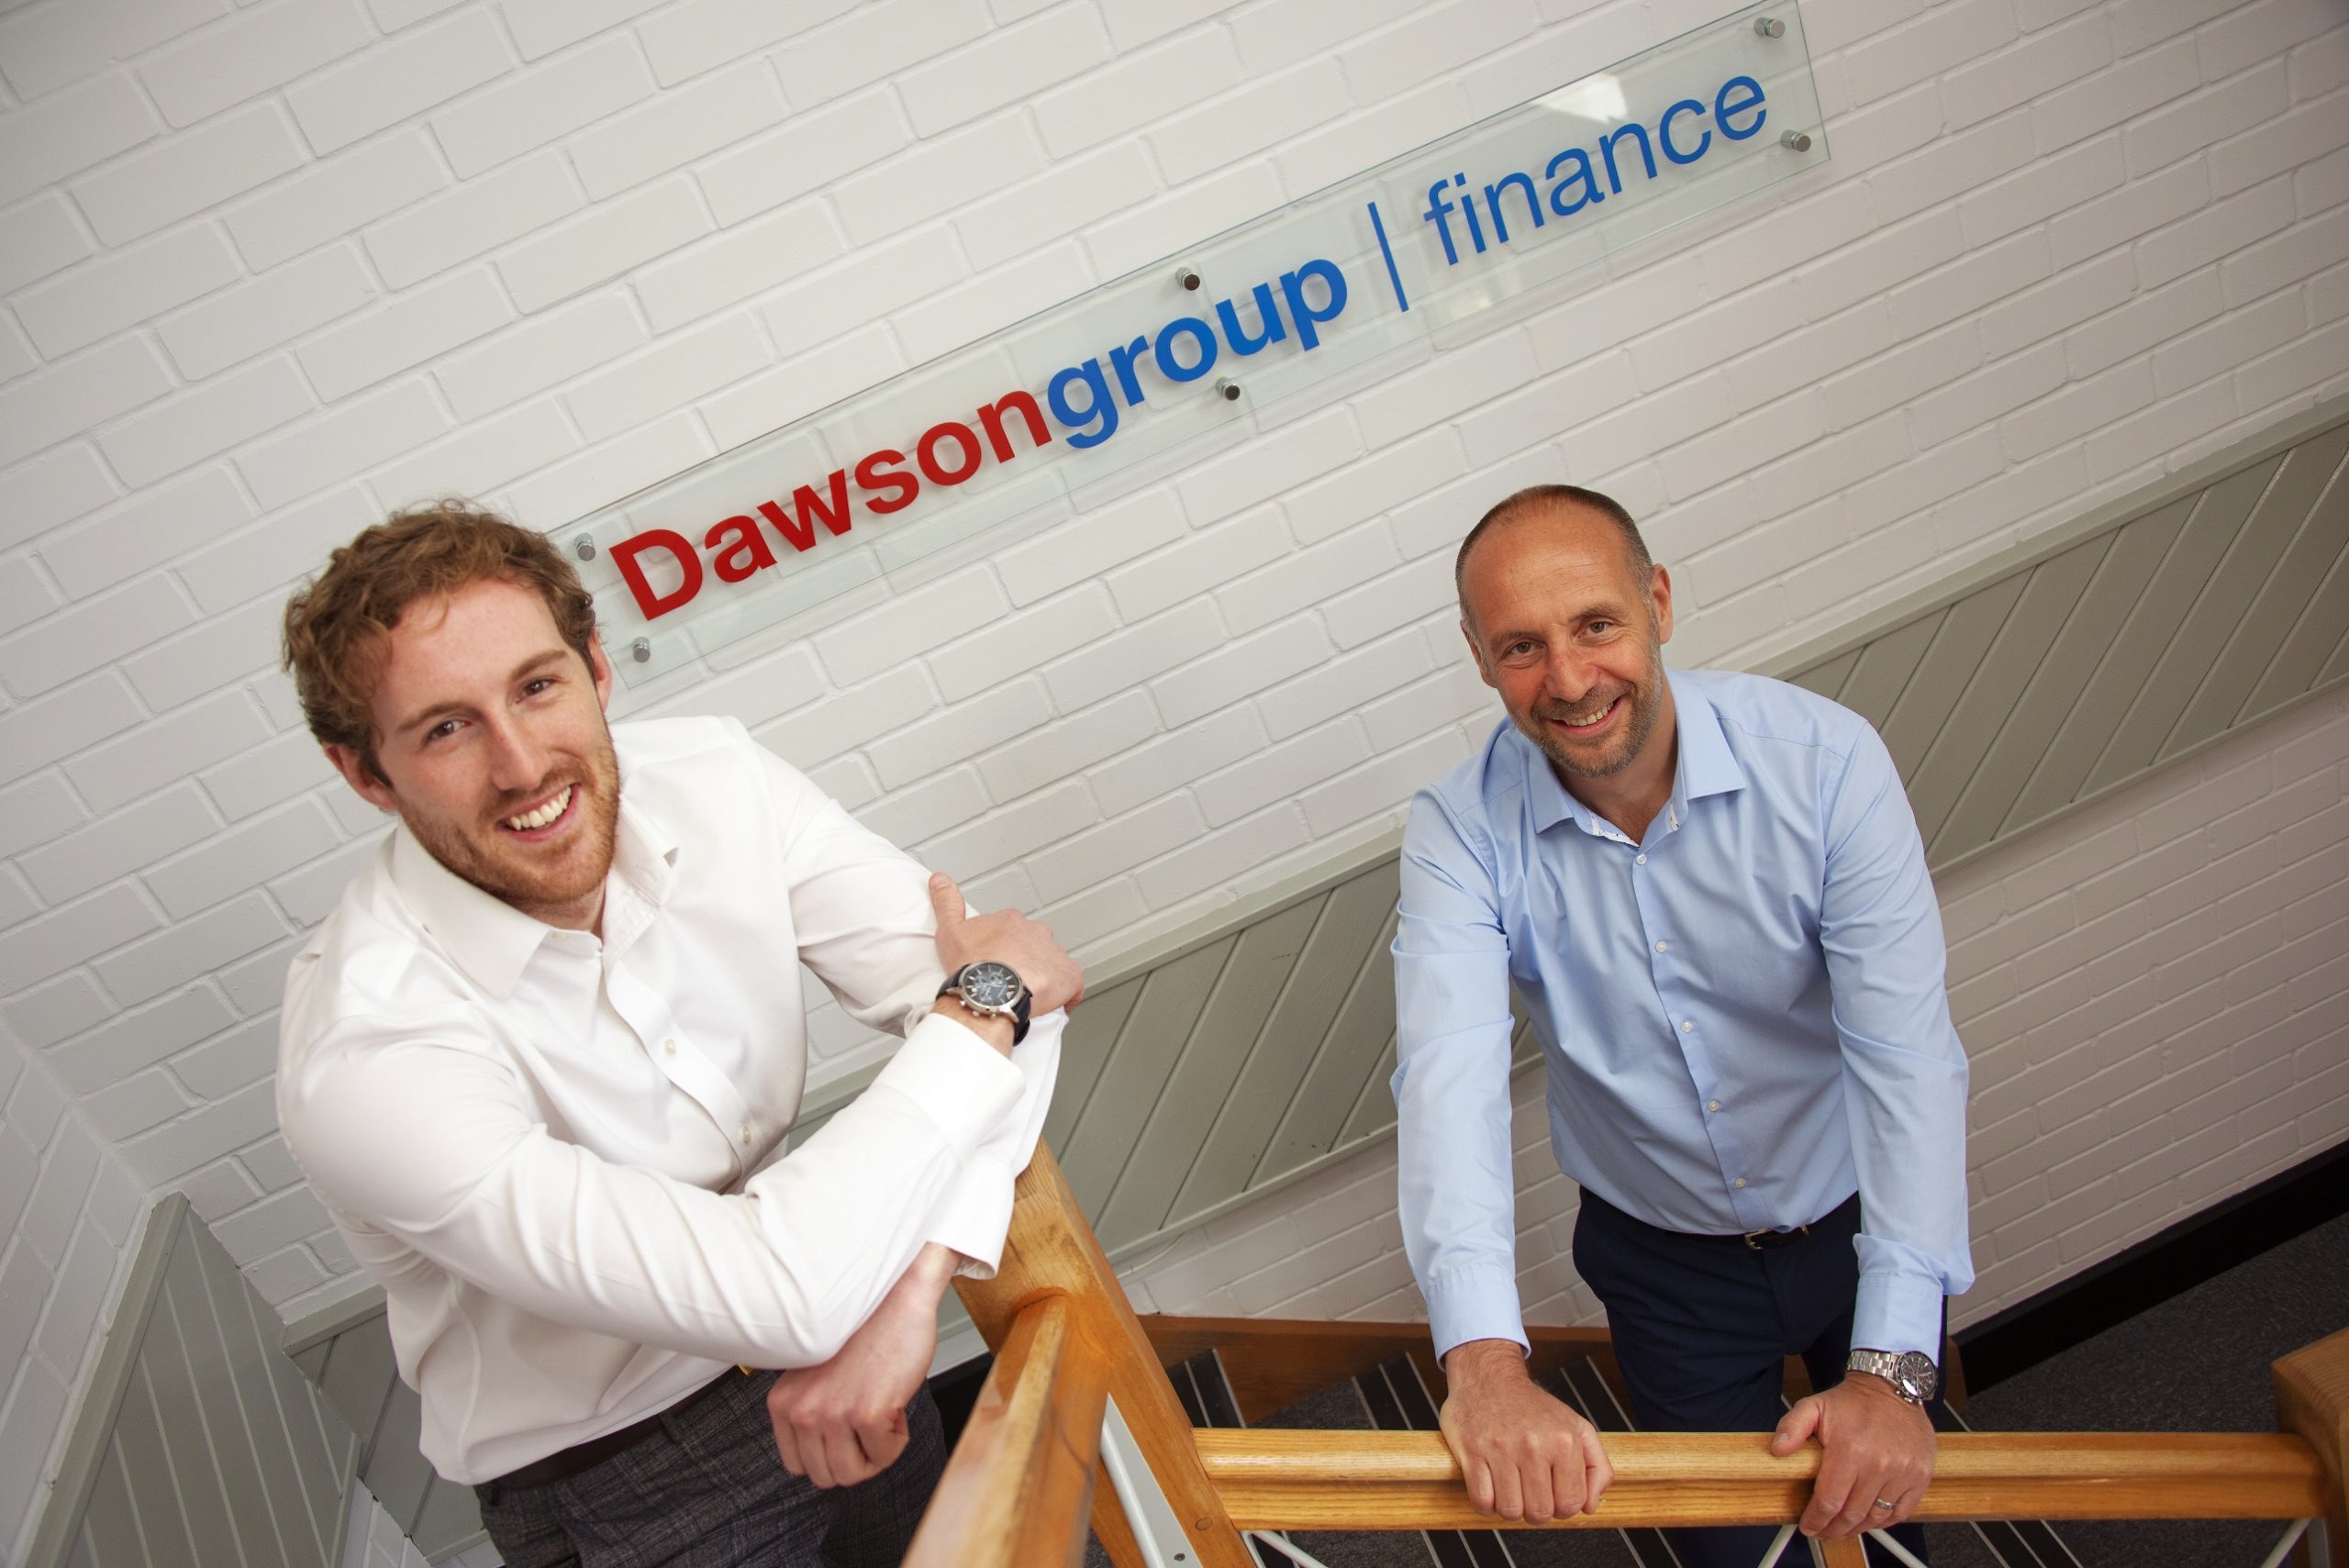 DG Finance supply chain asset finance - Matthew Bull and Kevin Wills